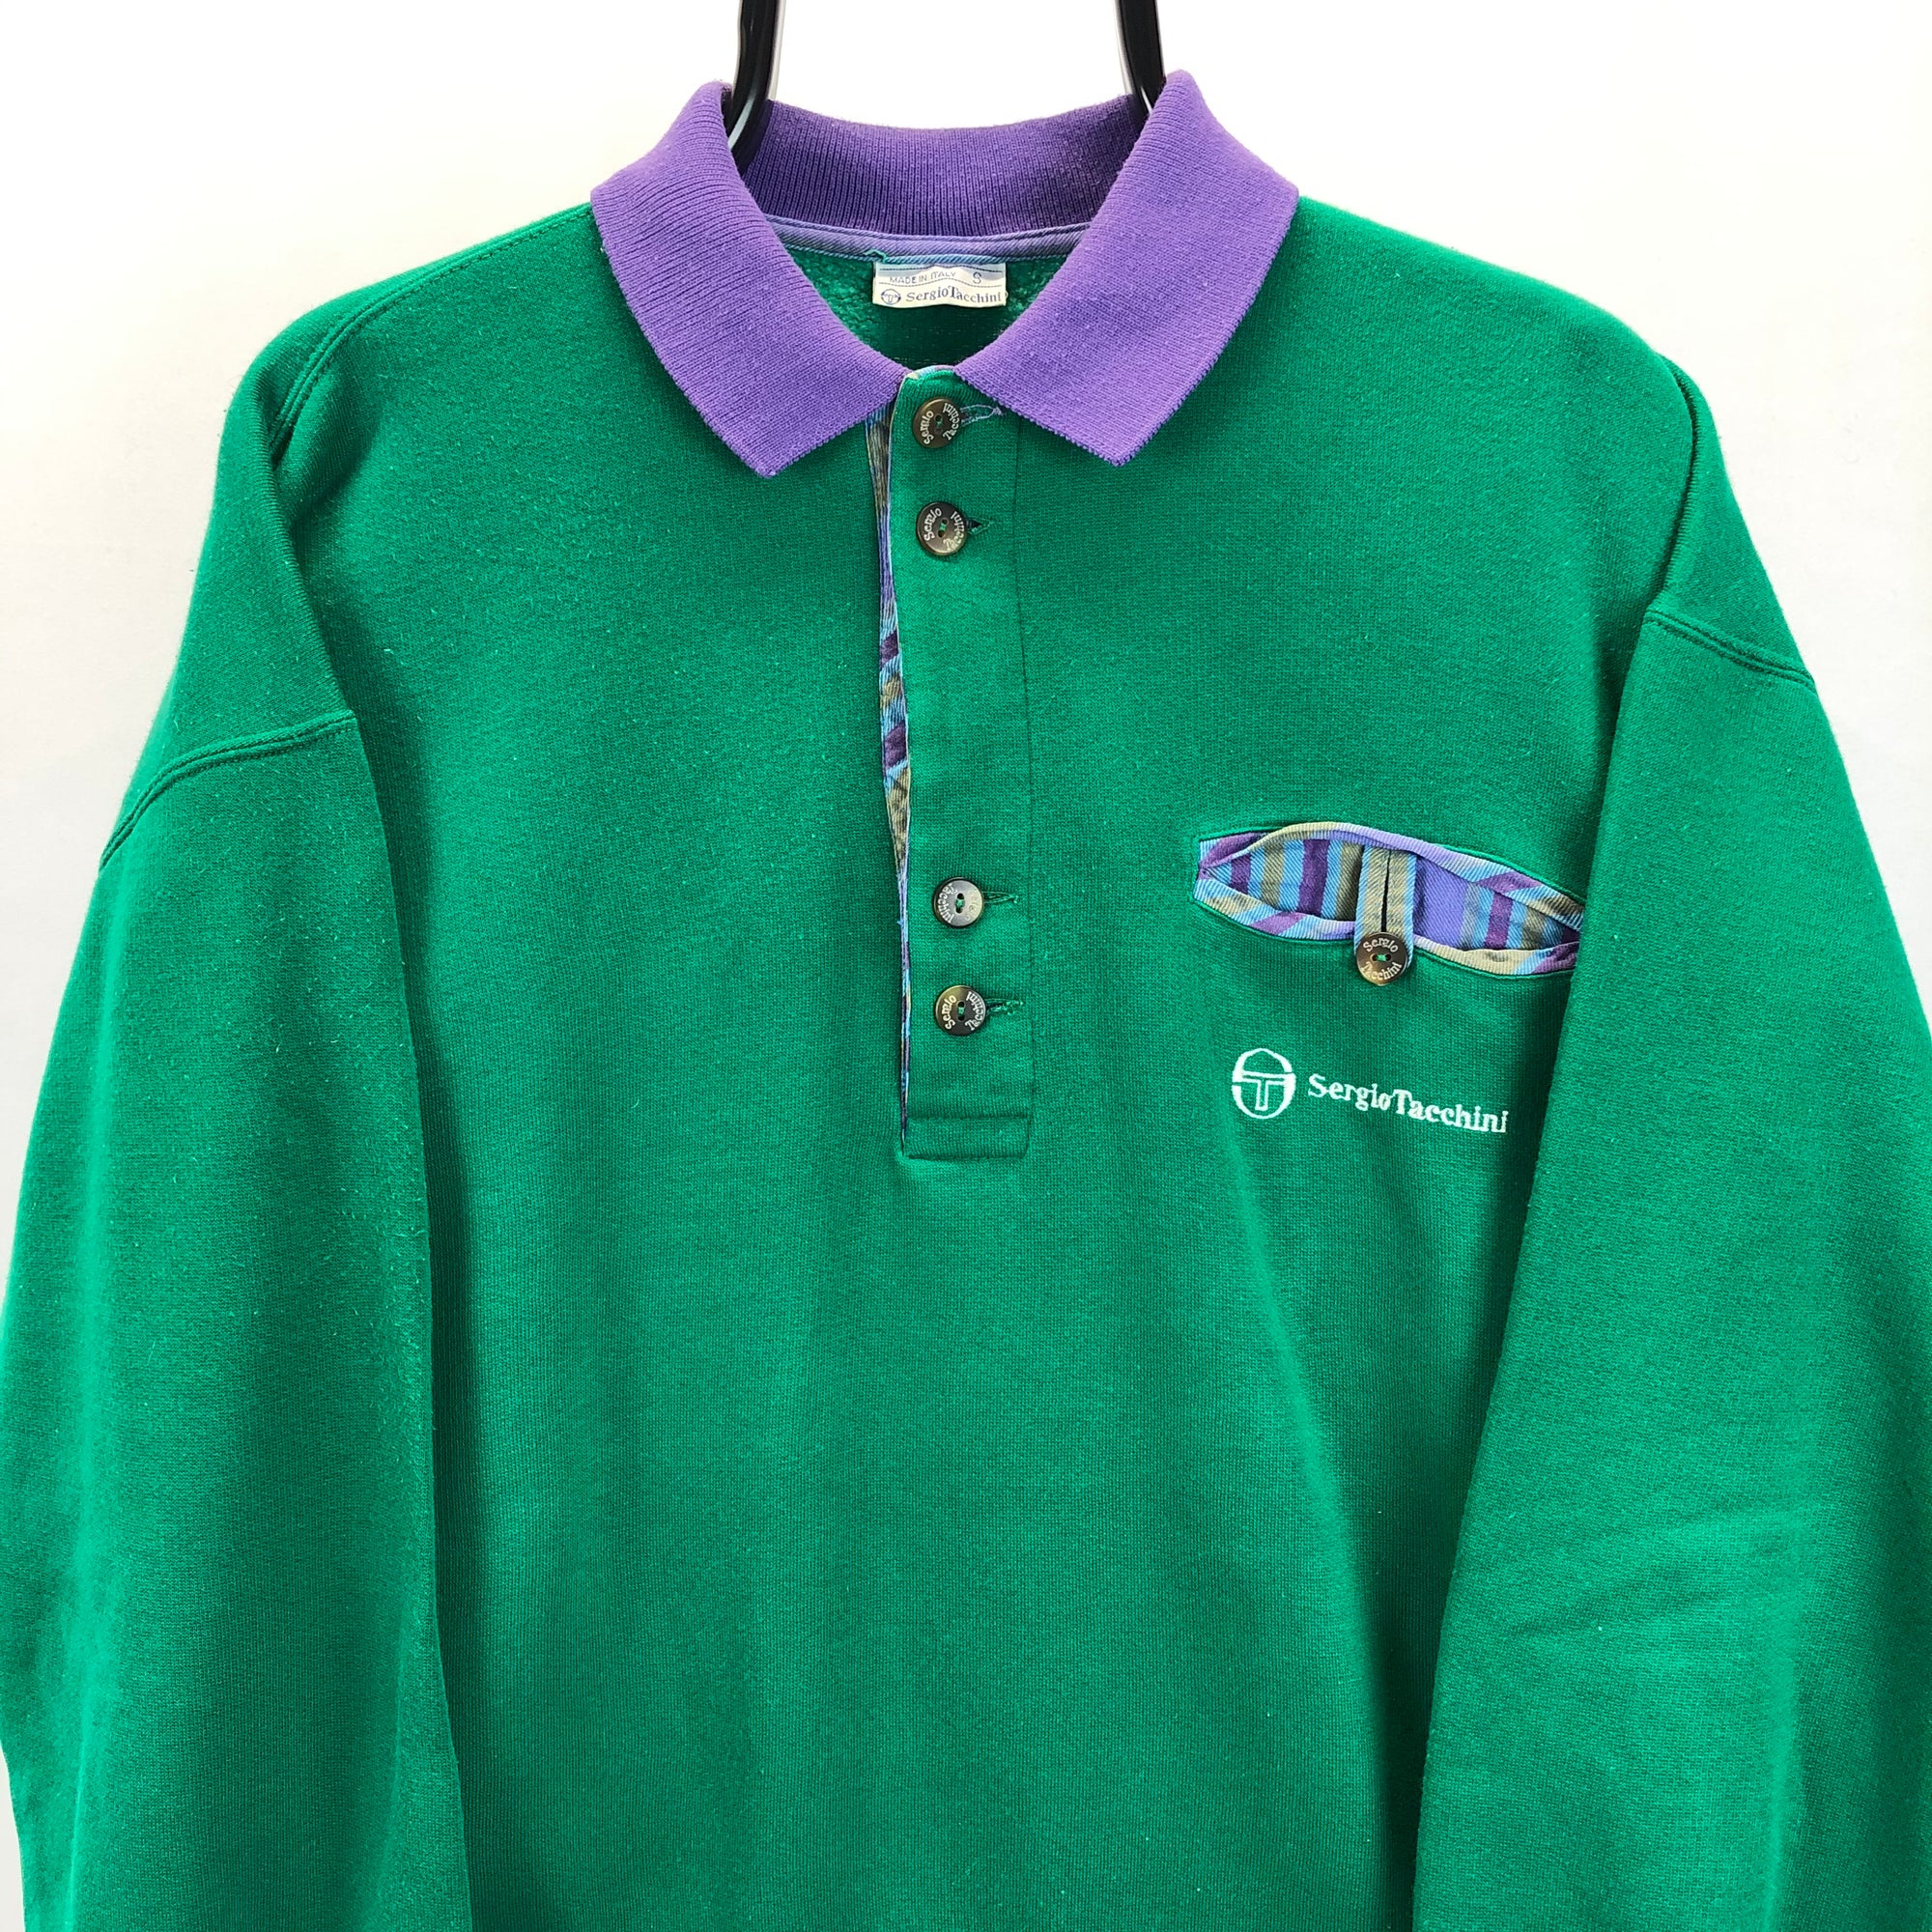 Vintage 90s Sergio Tacchini Collared Sweatshirt - Men's Small/Women's Medium